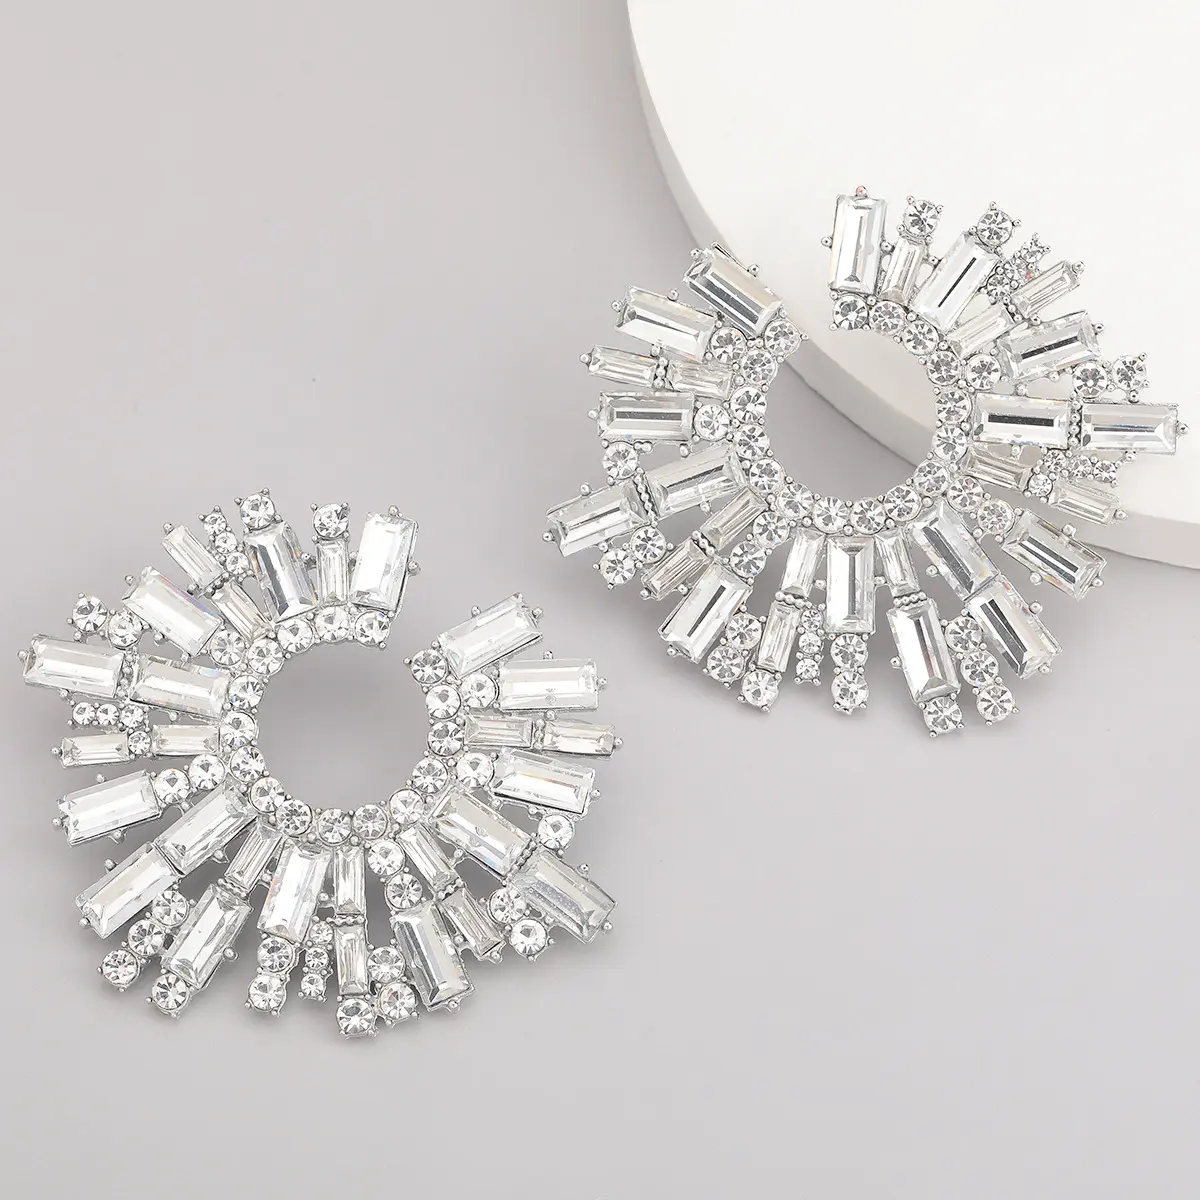 New Trend Shiny Crystal Drop Earrings Modern Dinner Party Wedding Fashion Jewelry Accessories Colorful Rhinestone Hoop Earrings